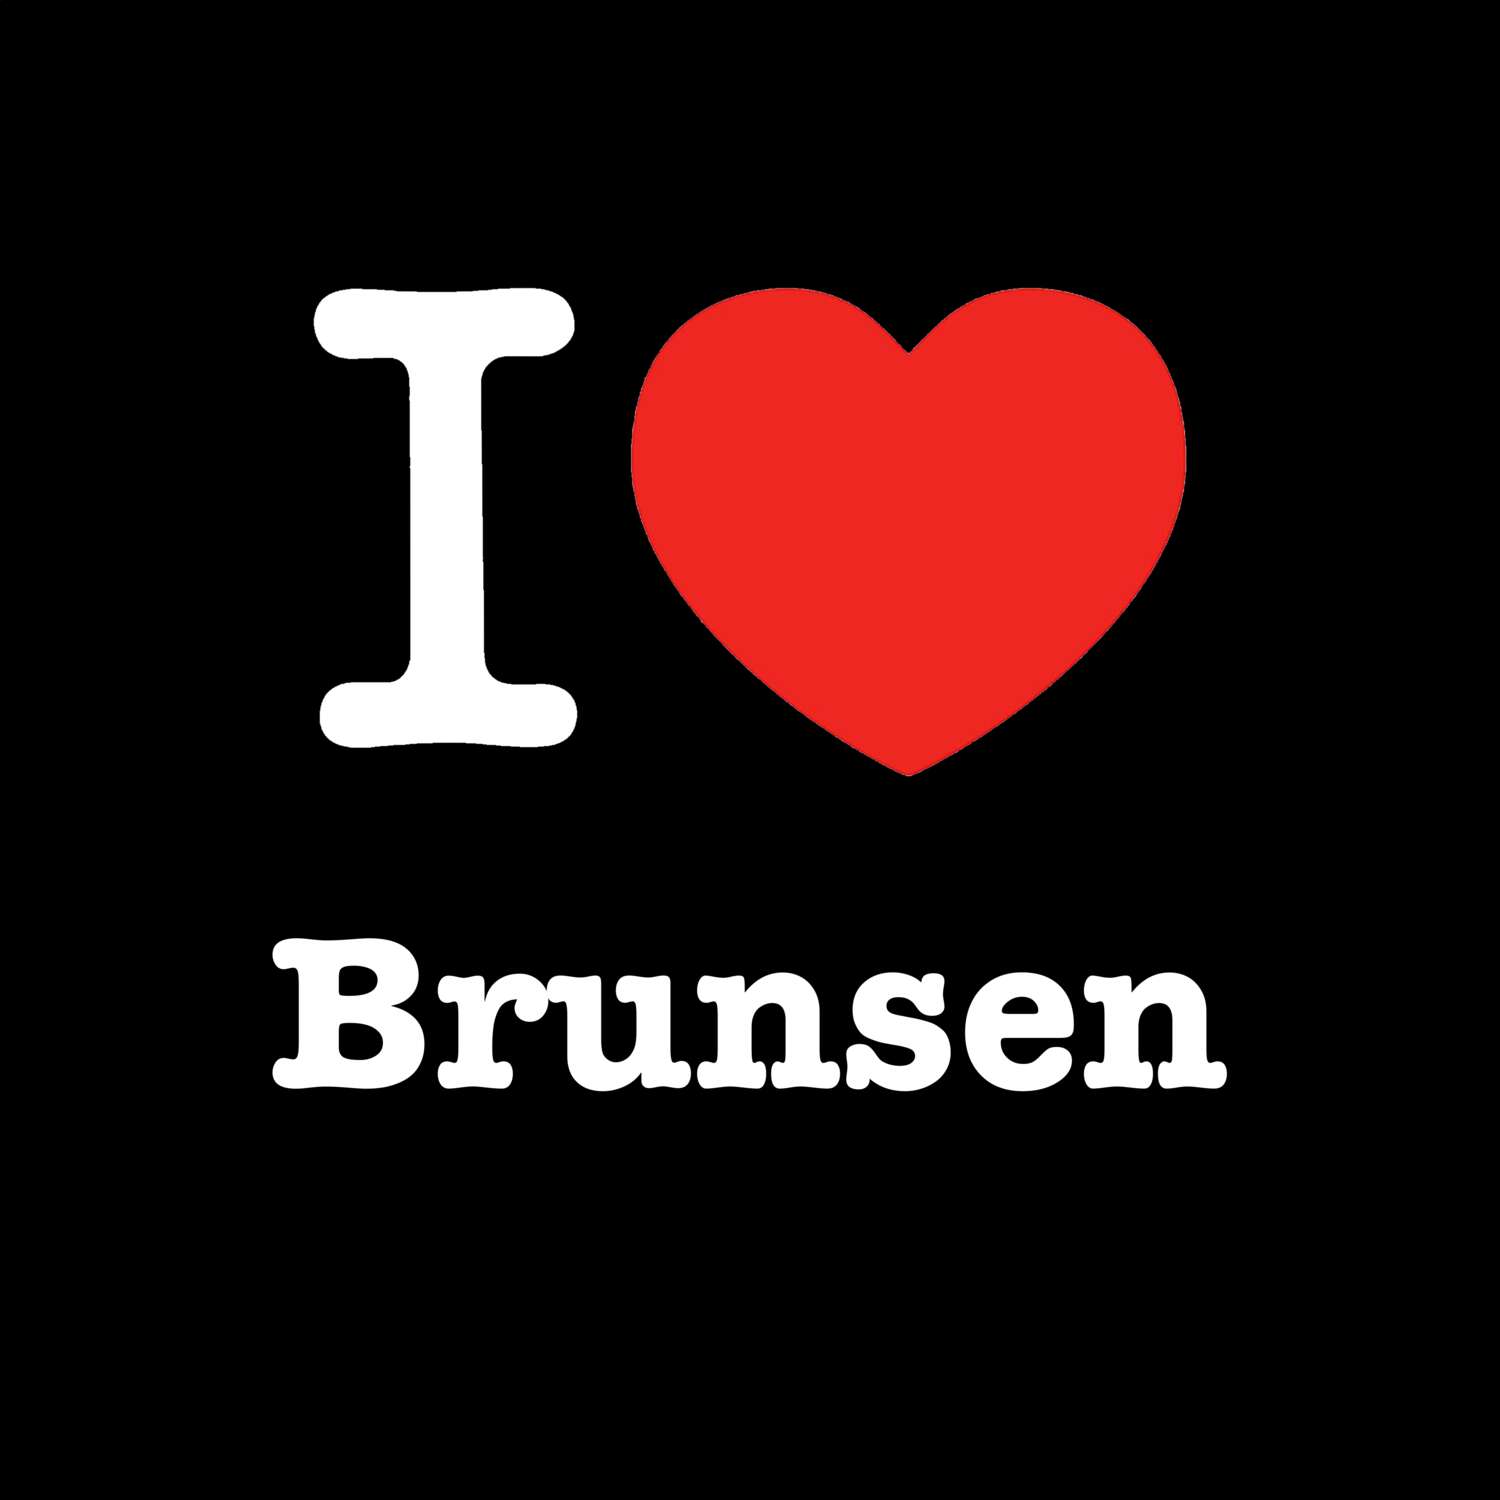 Brunsen T-Shirt »I love«